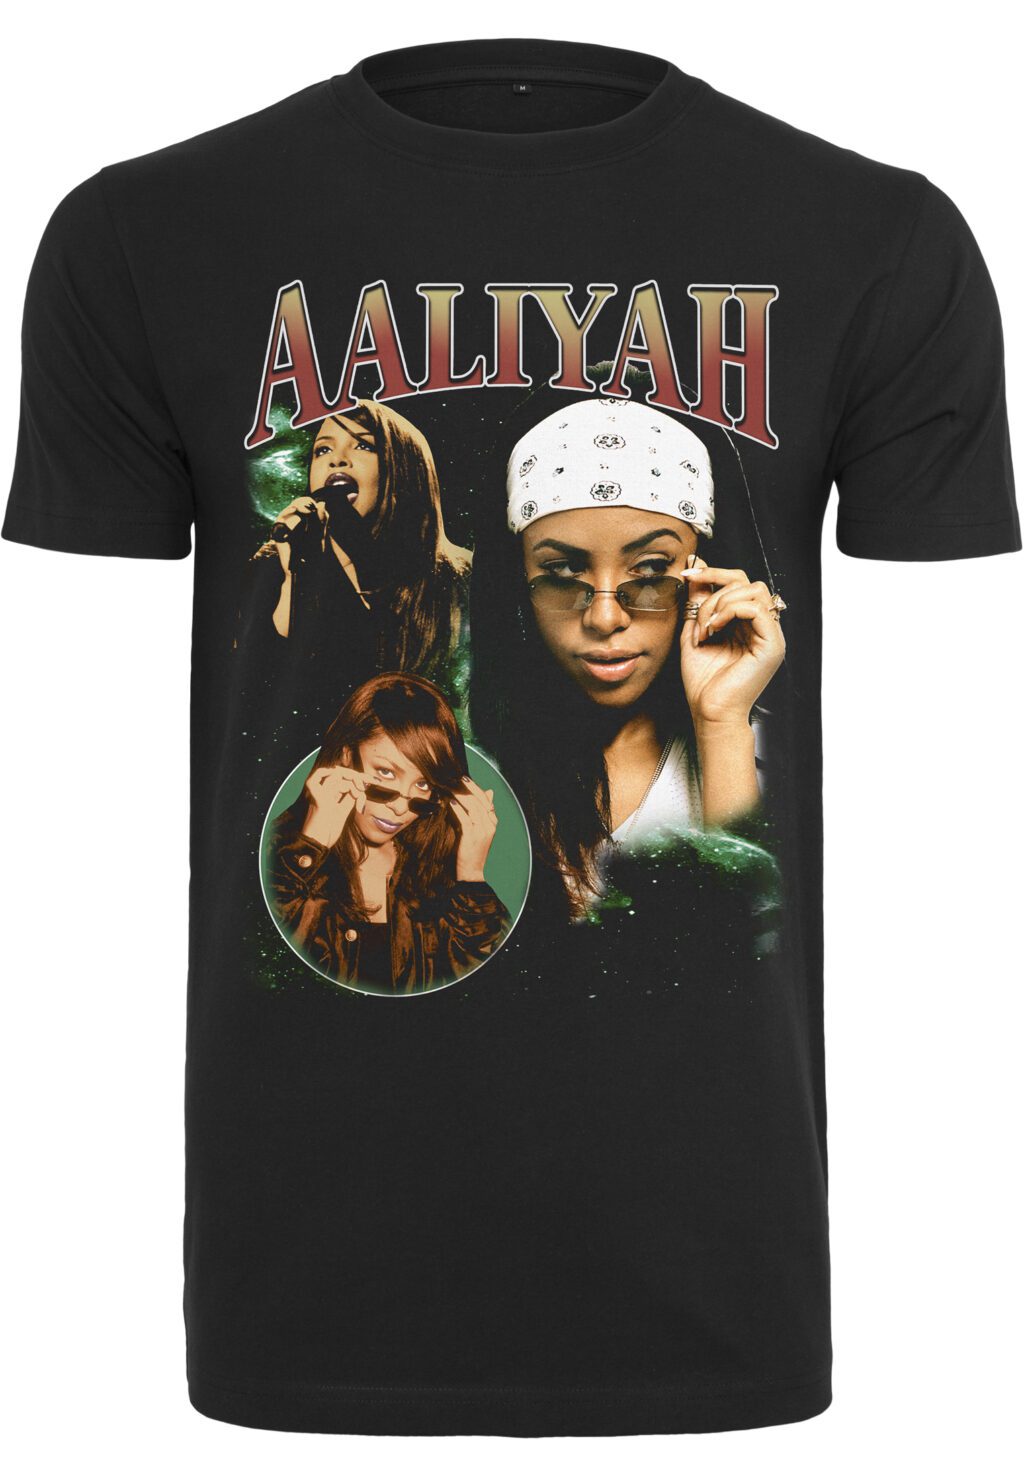 Aaliyah Retro Oversize Tee black MT1823